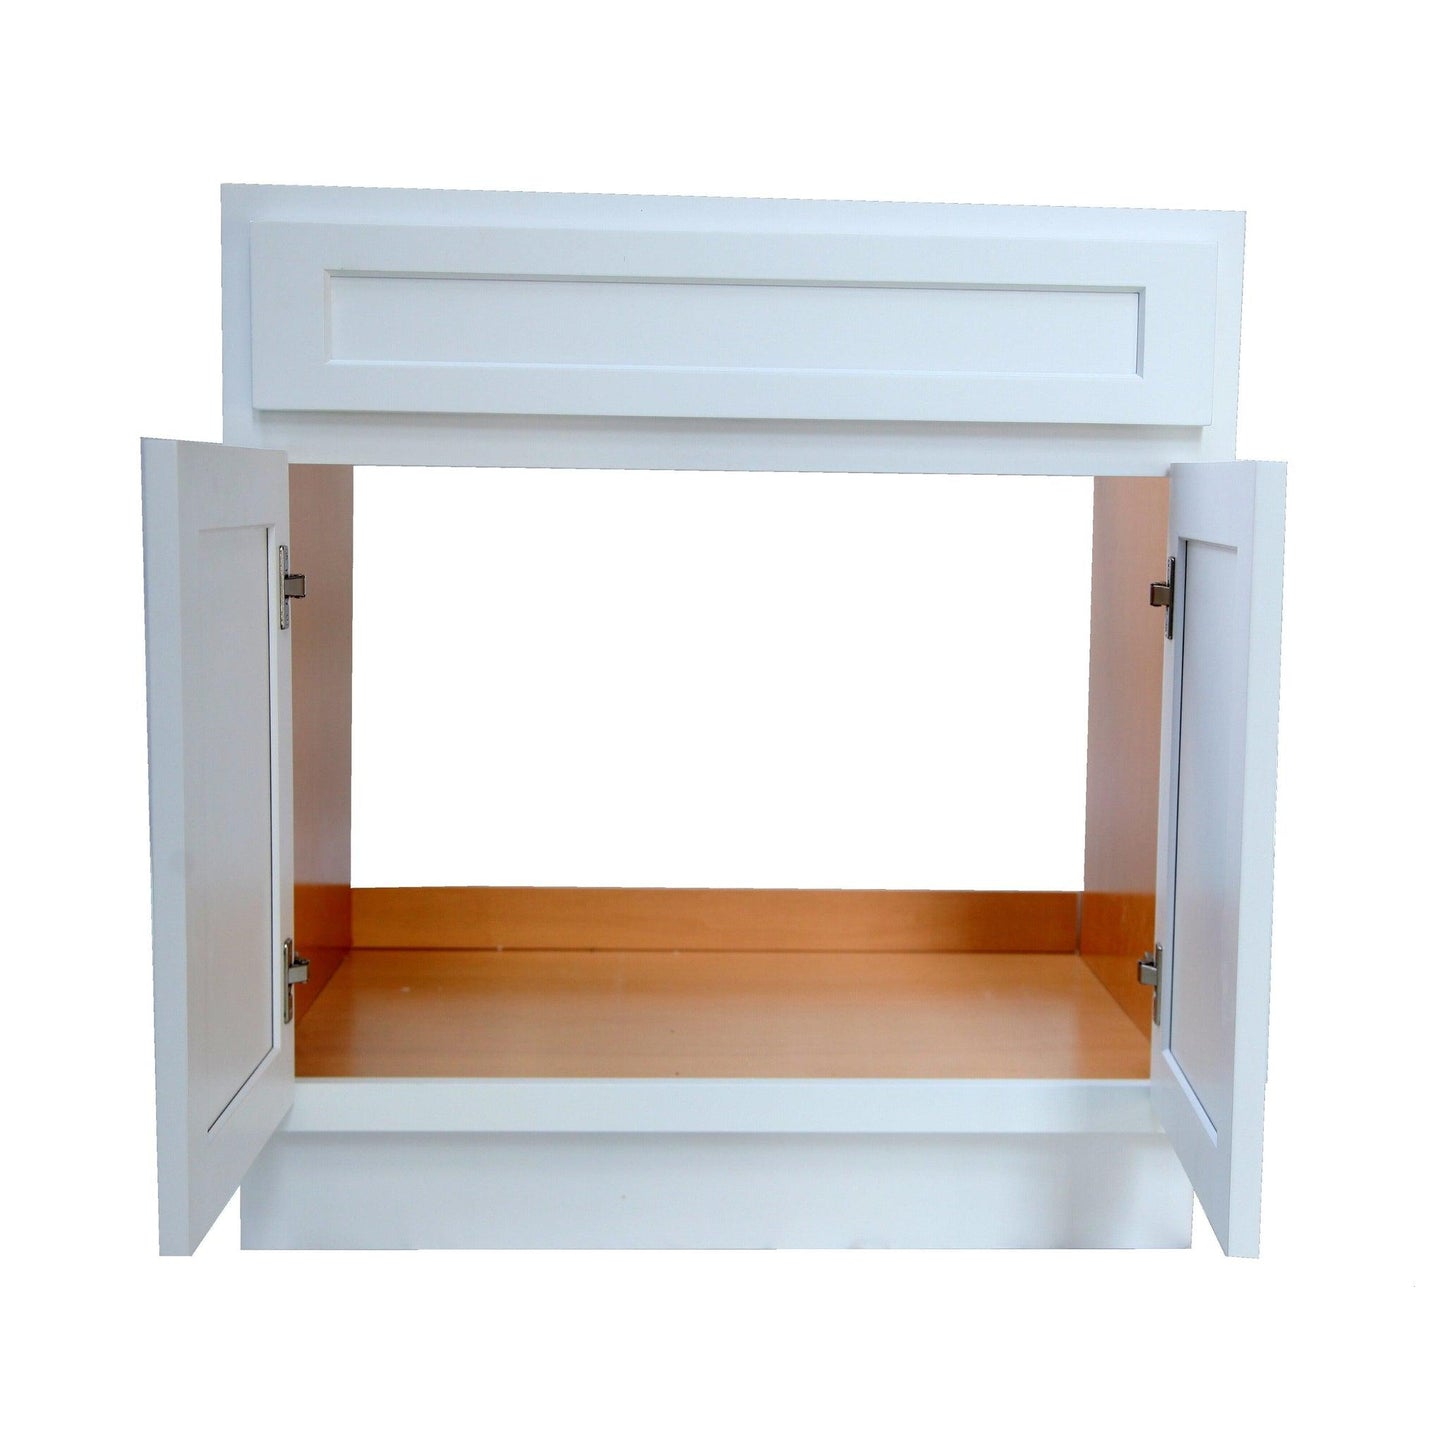 Vanity Art 36" White Freestanding Solid Wood Vanity Cabinet With Soft Closing Doors